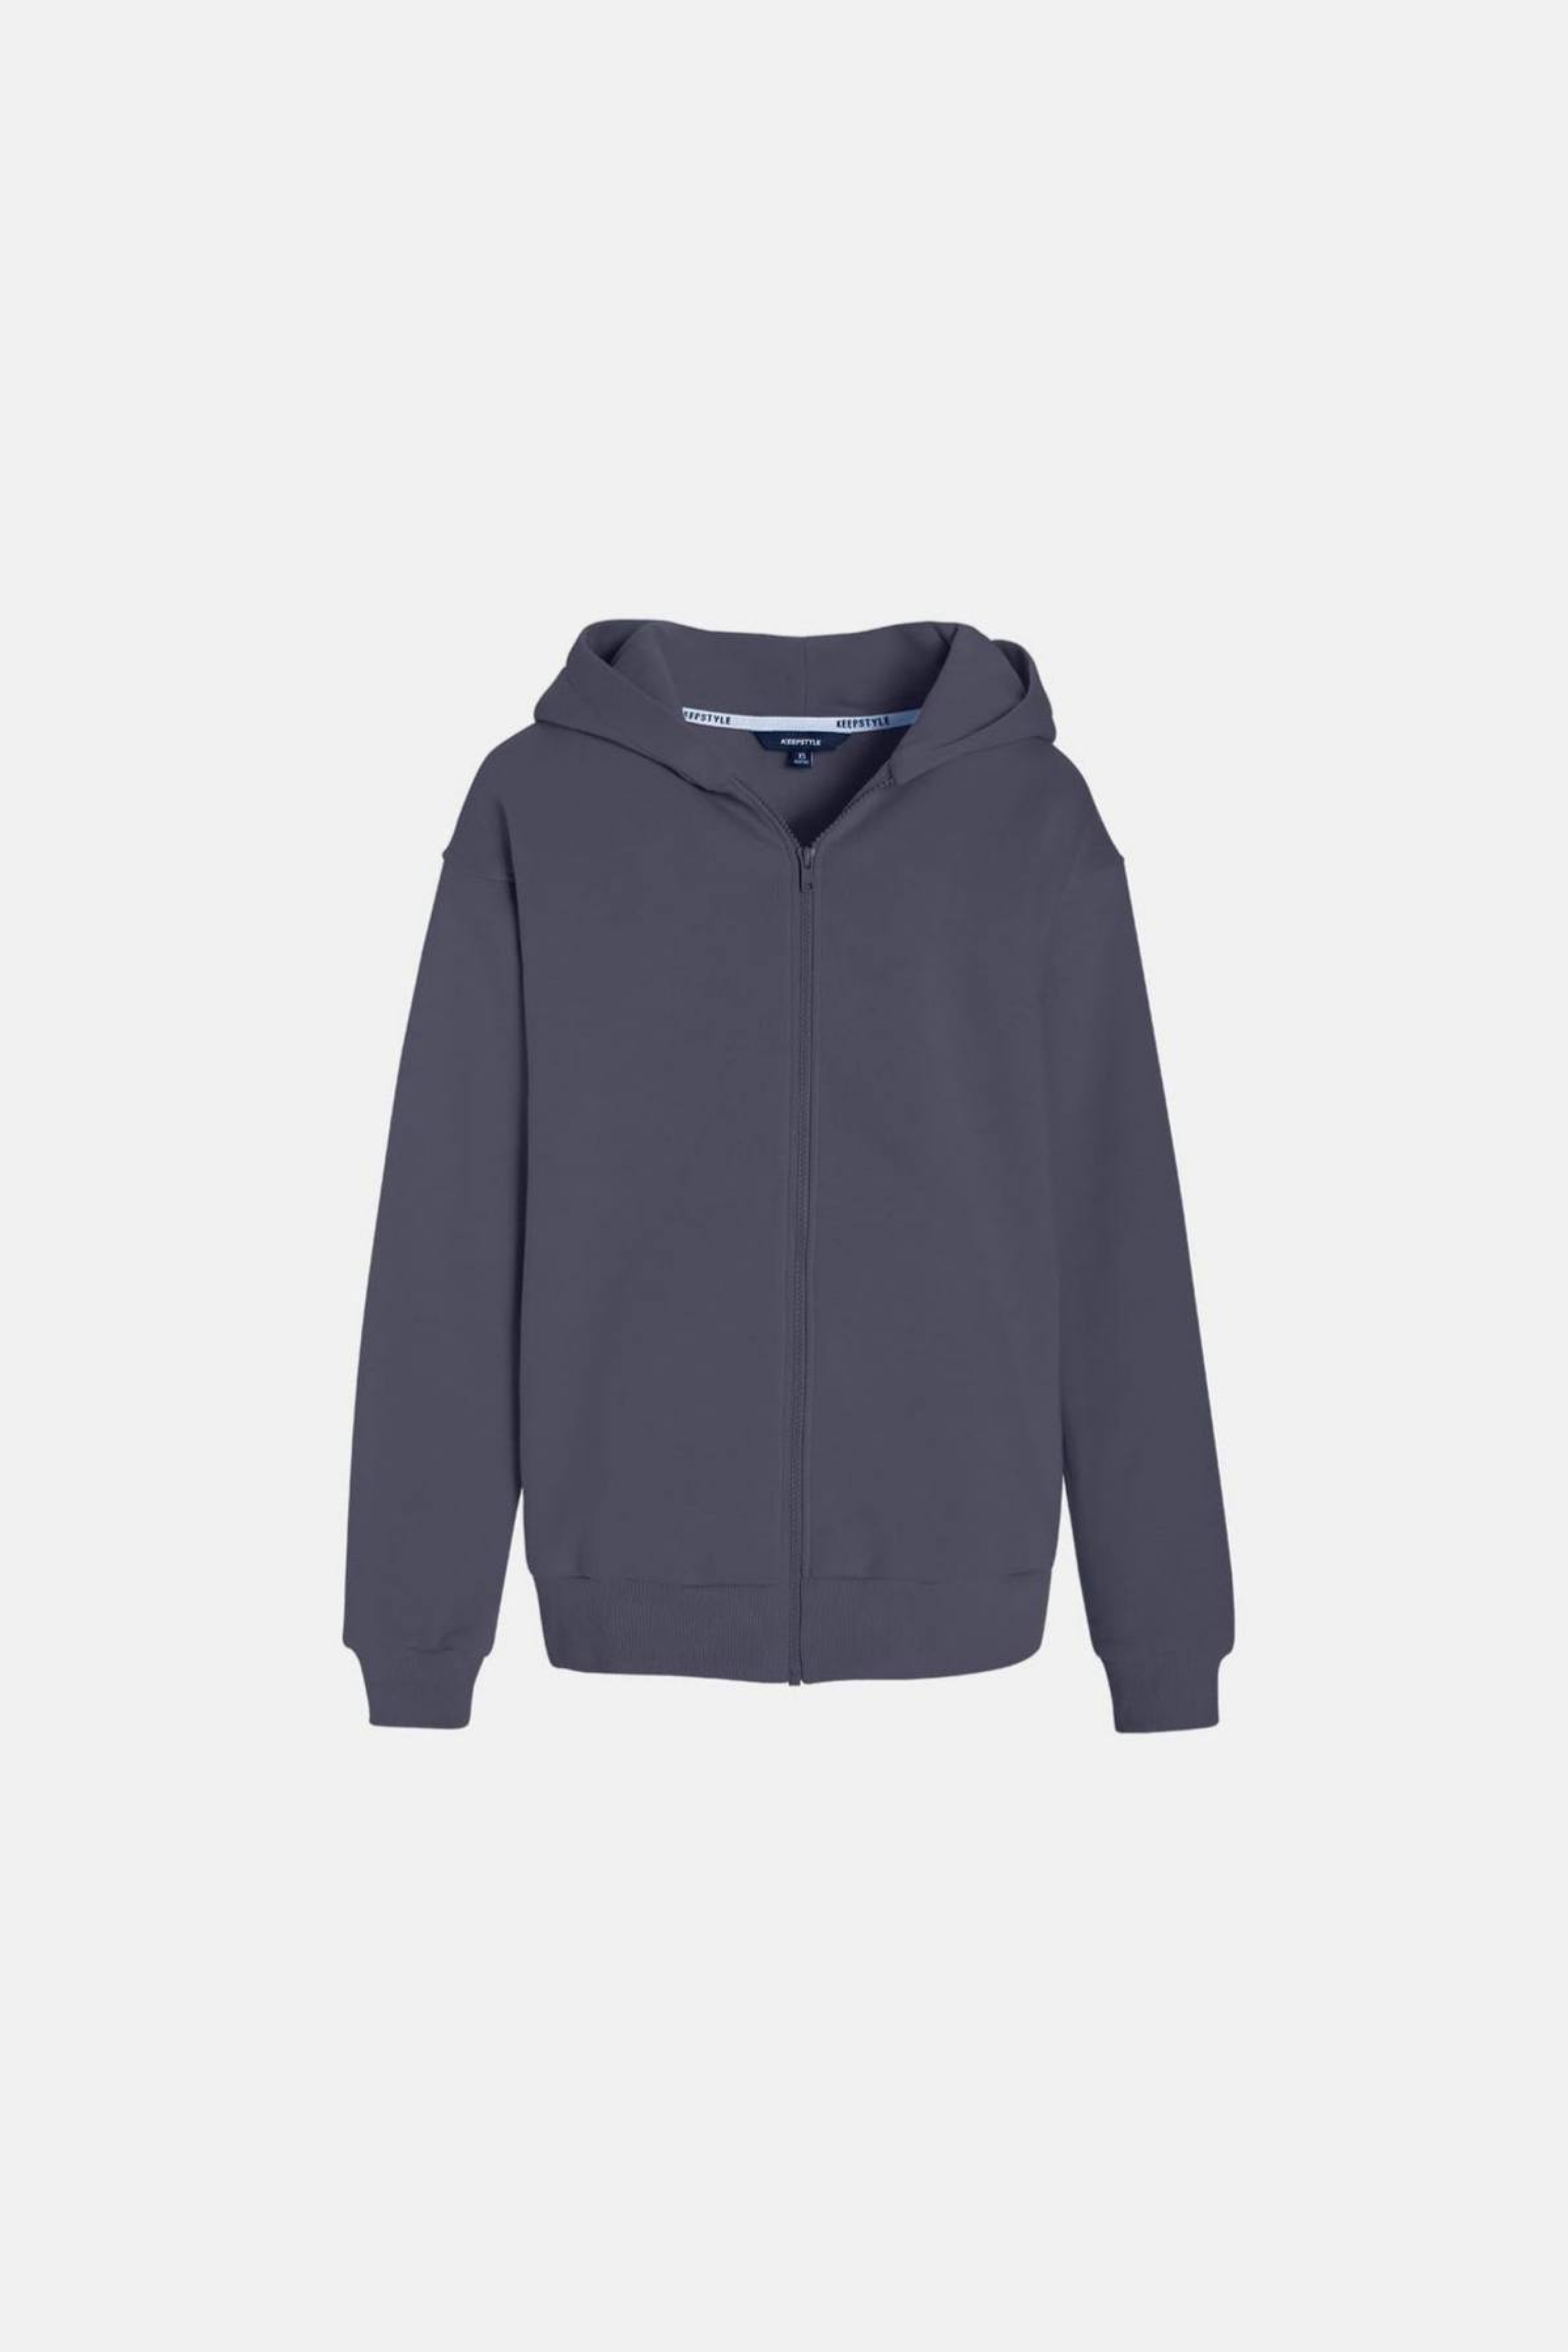 zip-up hoodie warm in graphite color